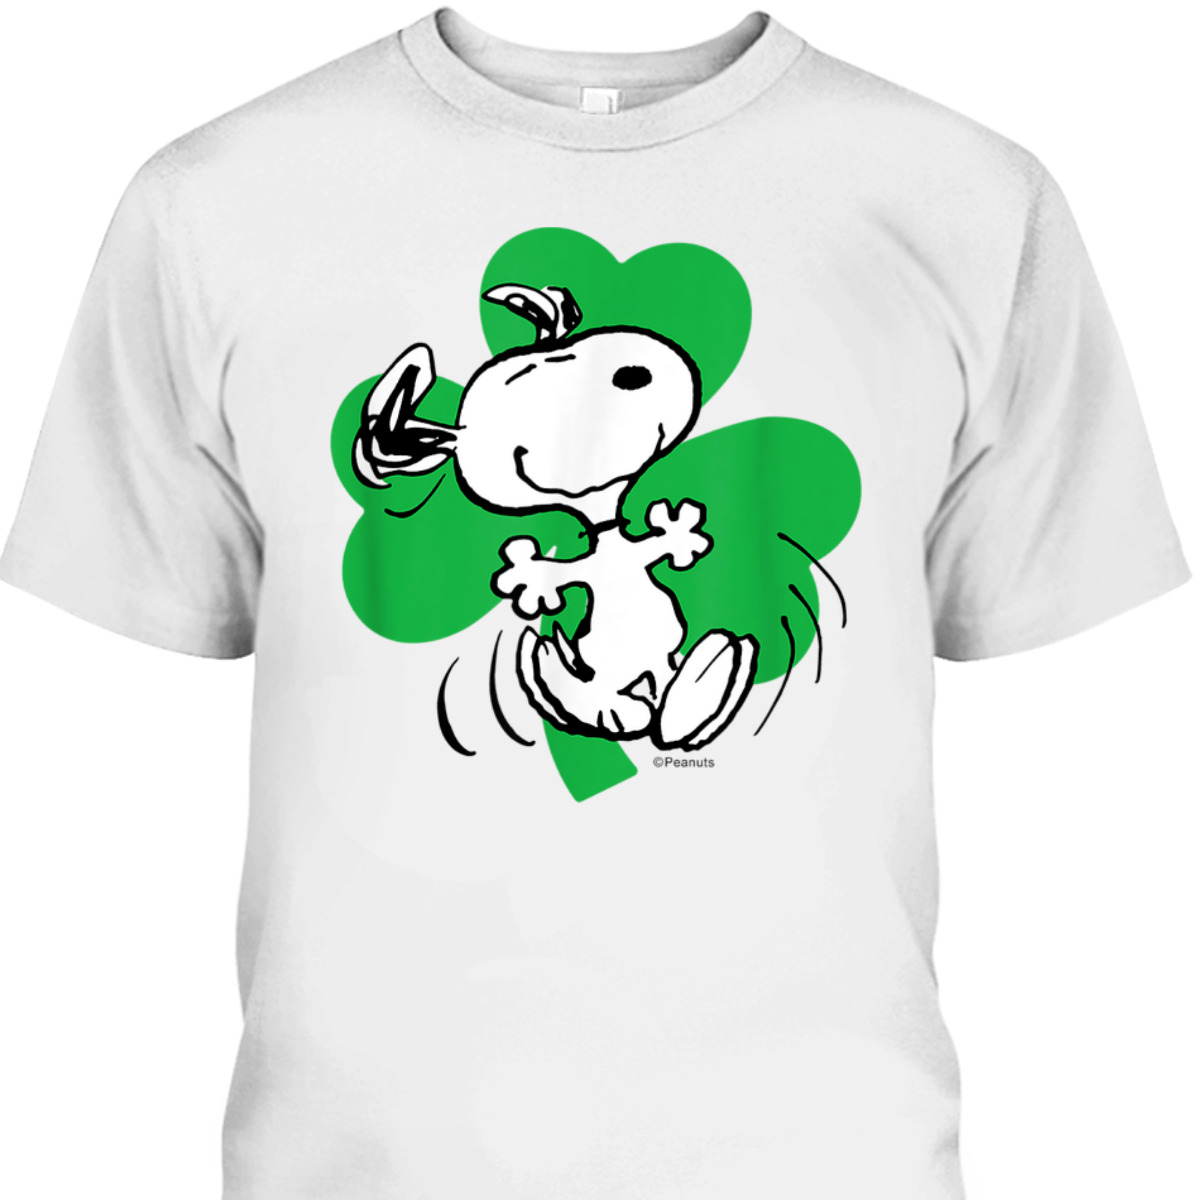 Peanuts Snoopy Shamrock St. Patrick's Day T-Shirt